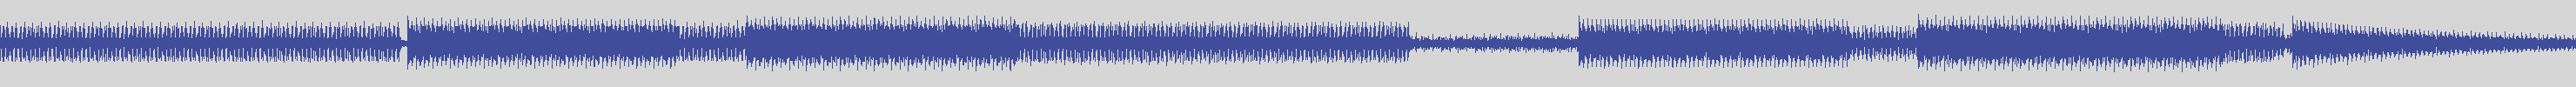 nf_boyz_records [NFY011] Conga Del Mar - Tribalando [Original Mix] audio wave form